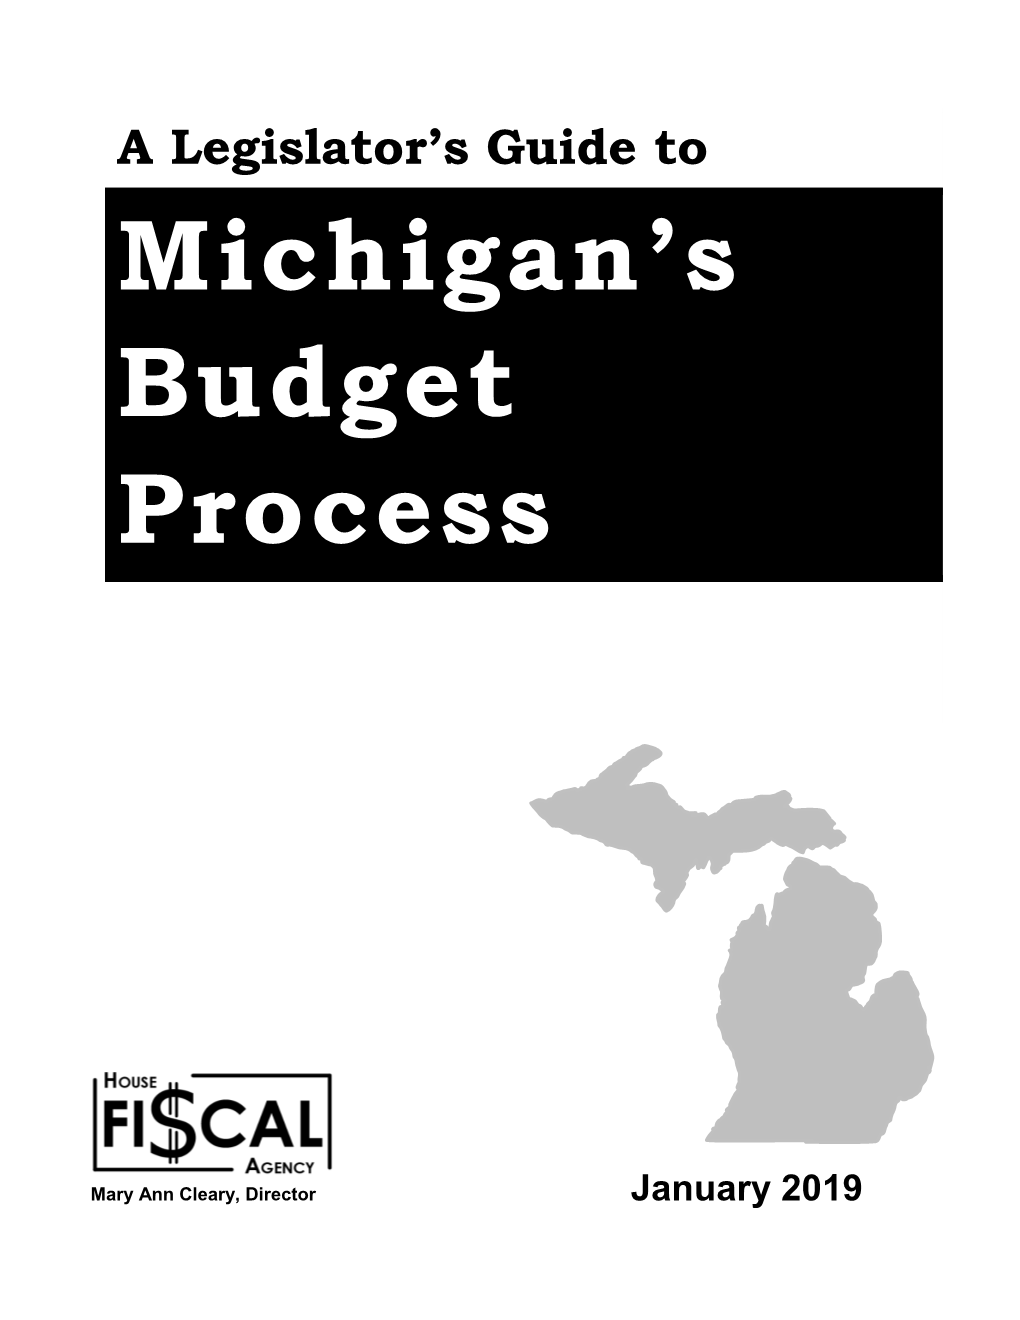 A Legislator's Guide to Michigan Budget Process